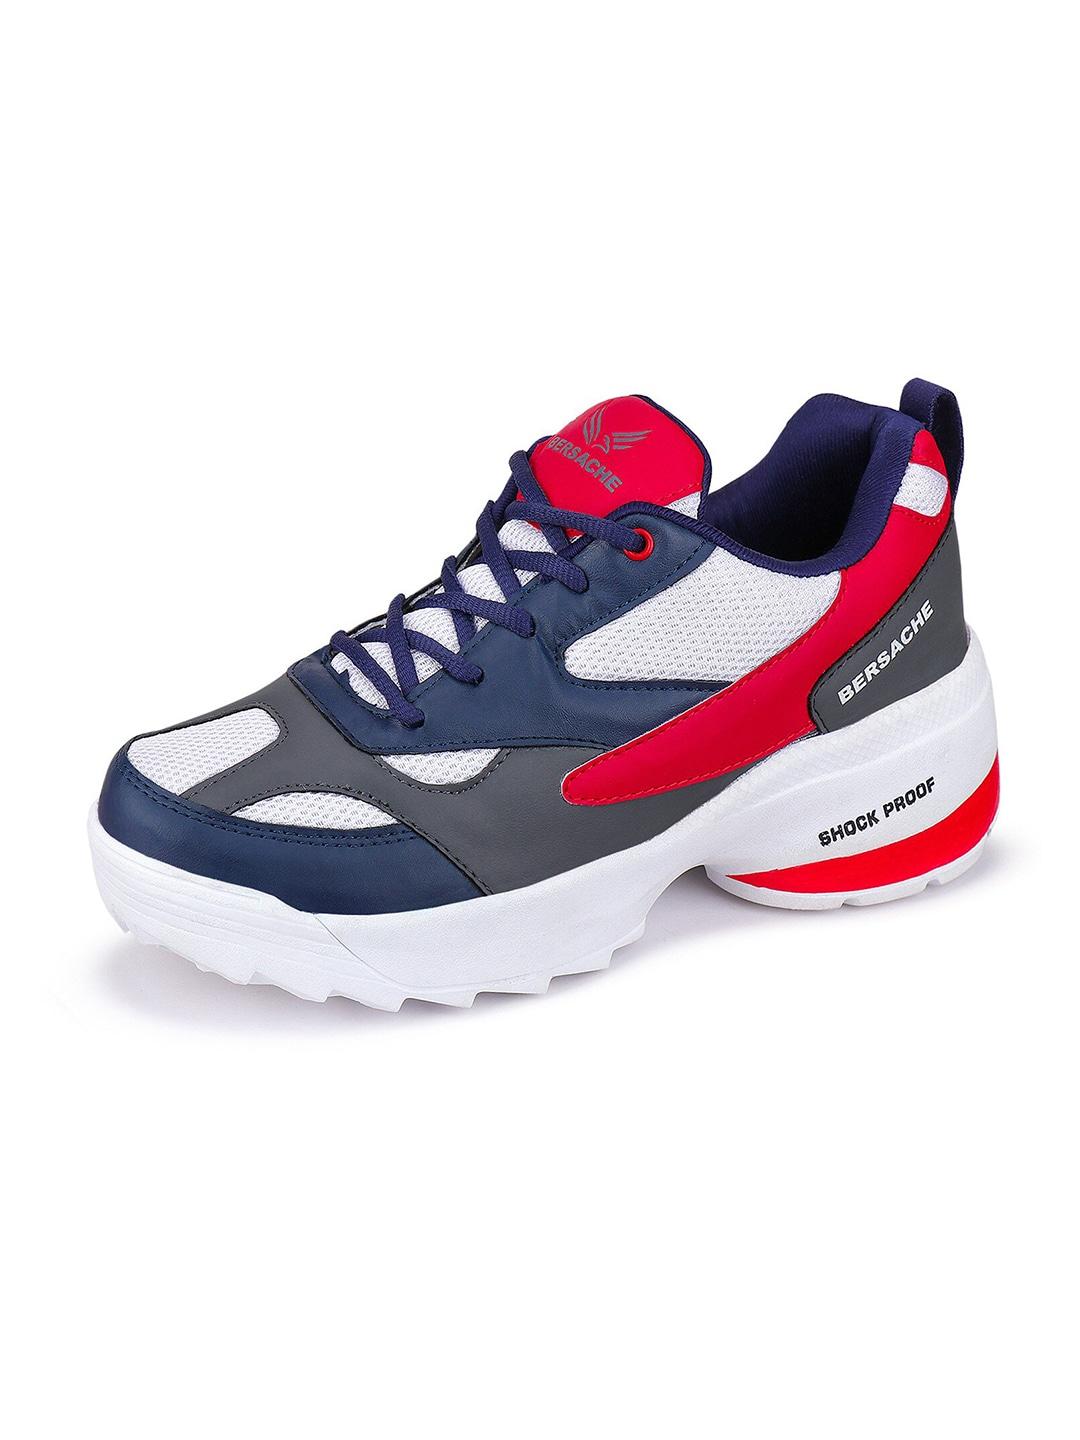 bersache-men-lightweight-shock-proof-running-shoes